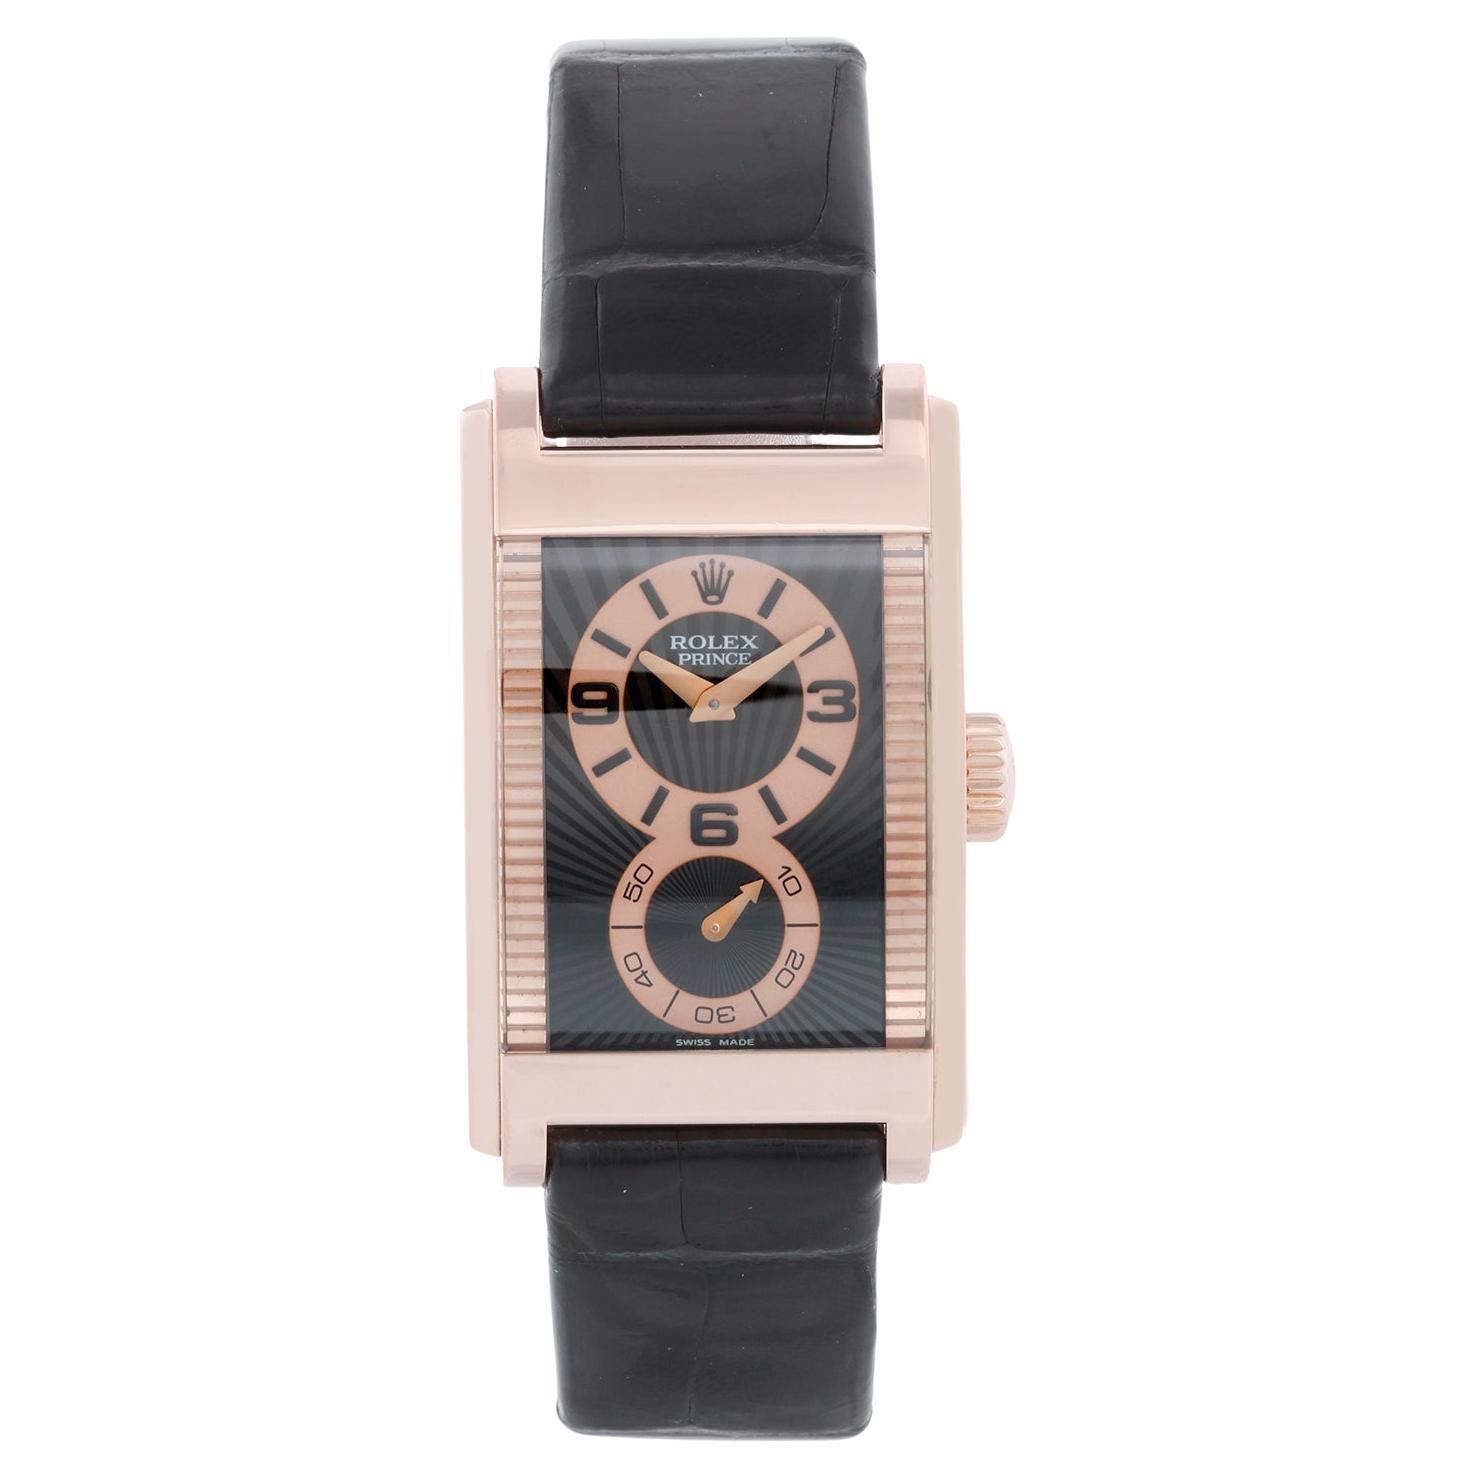 Rolex Cellini Prince 18k Rose Gold Men's Watch 5442